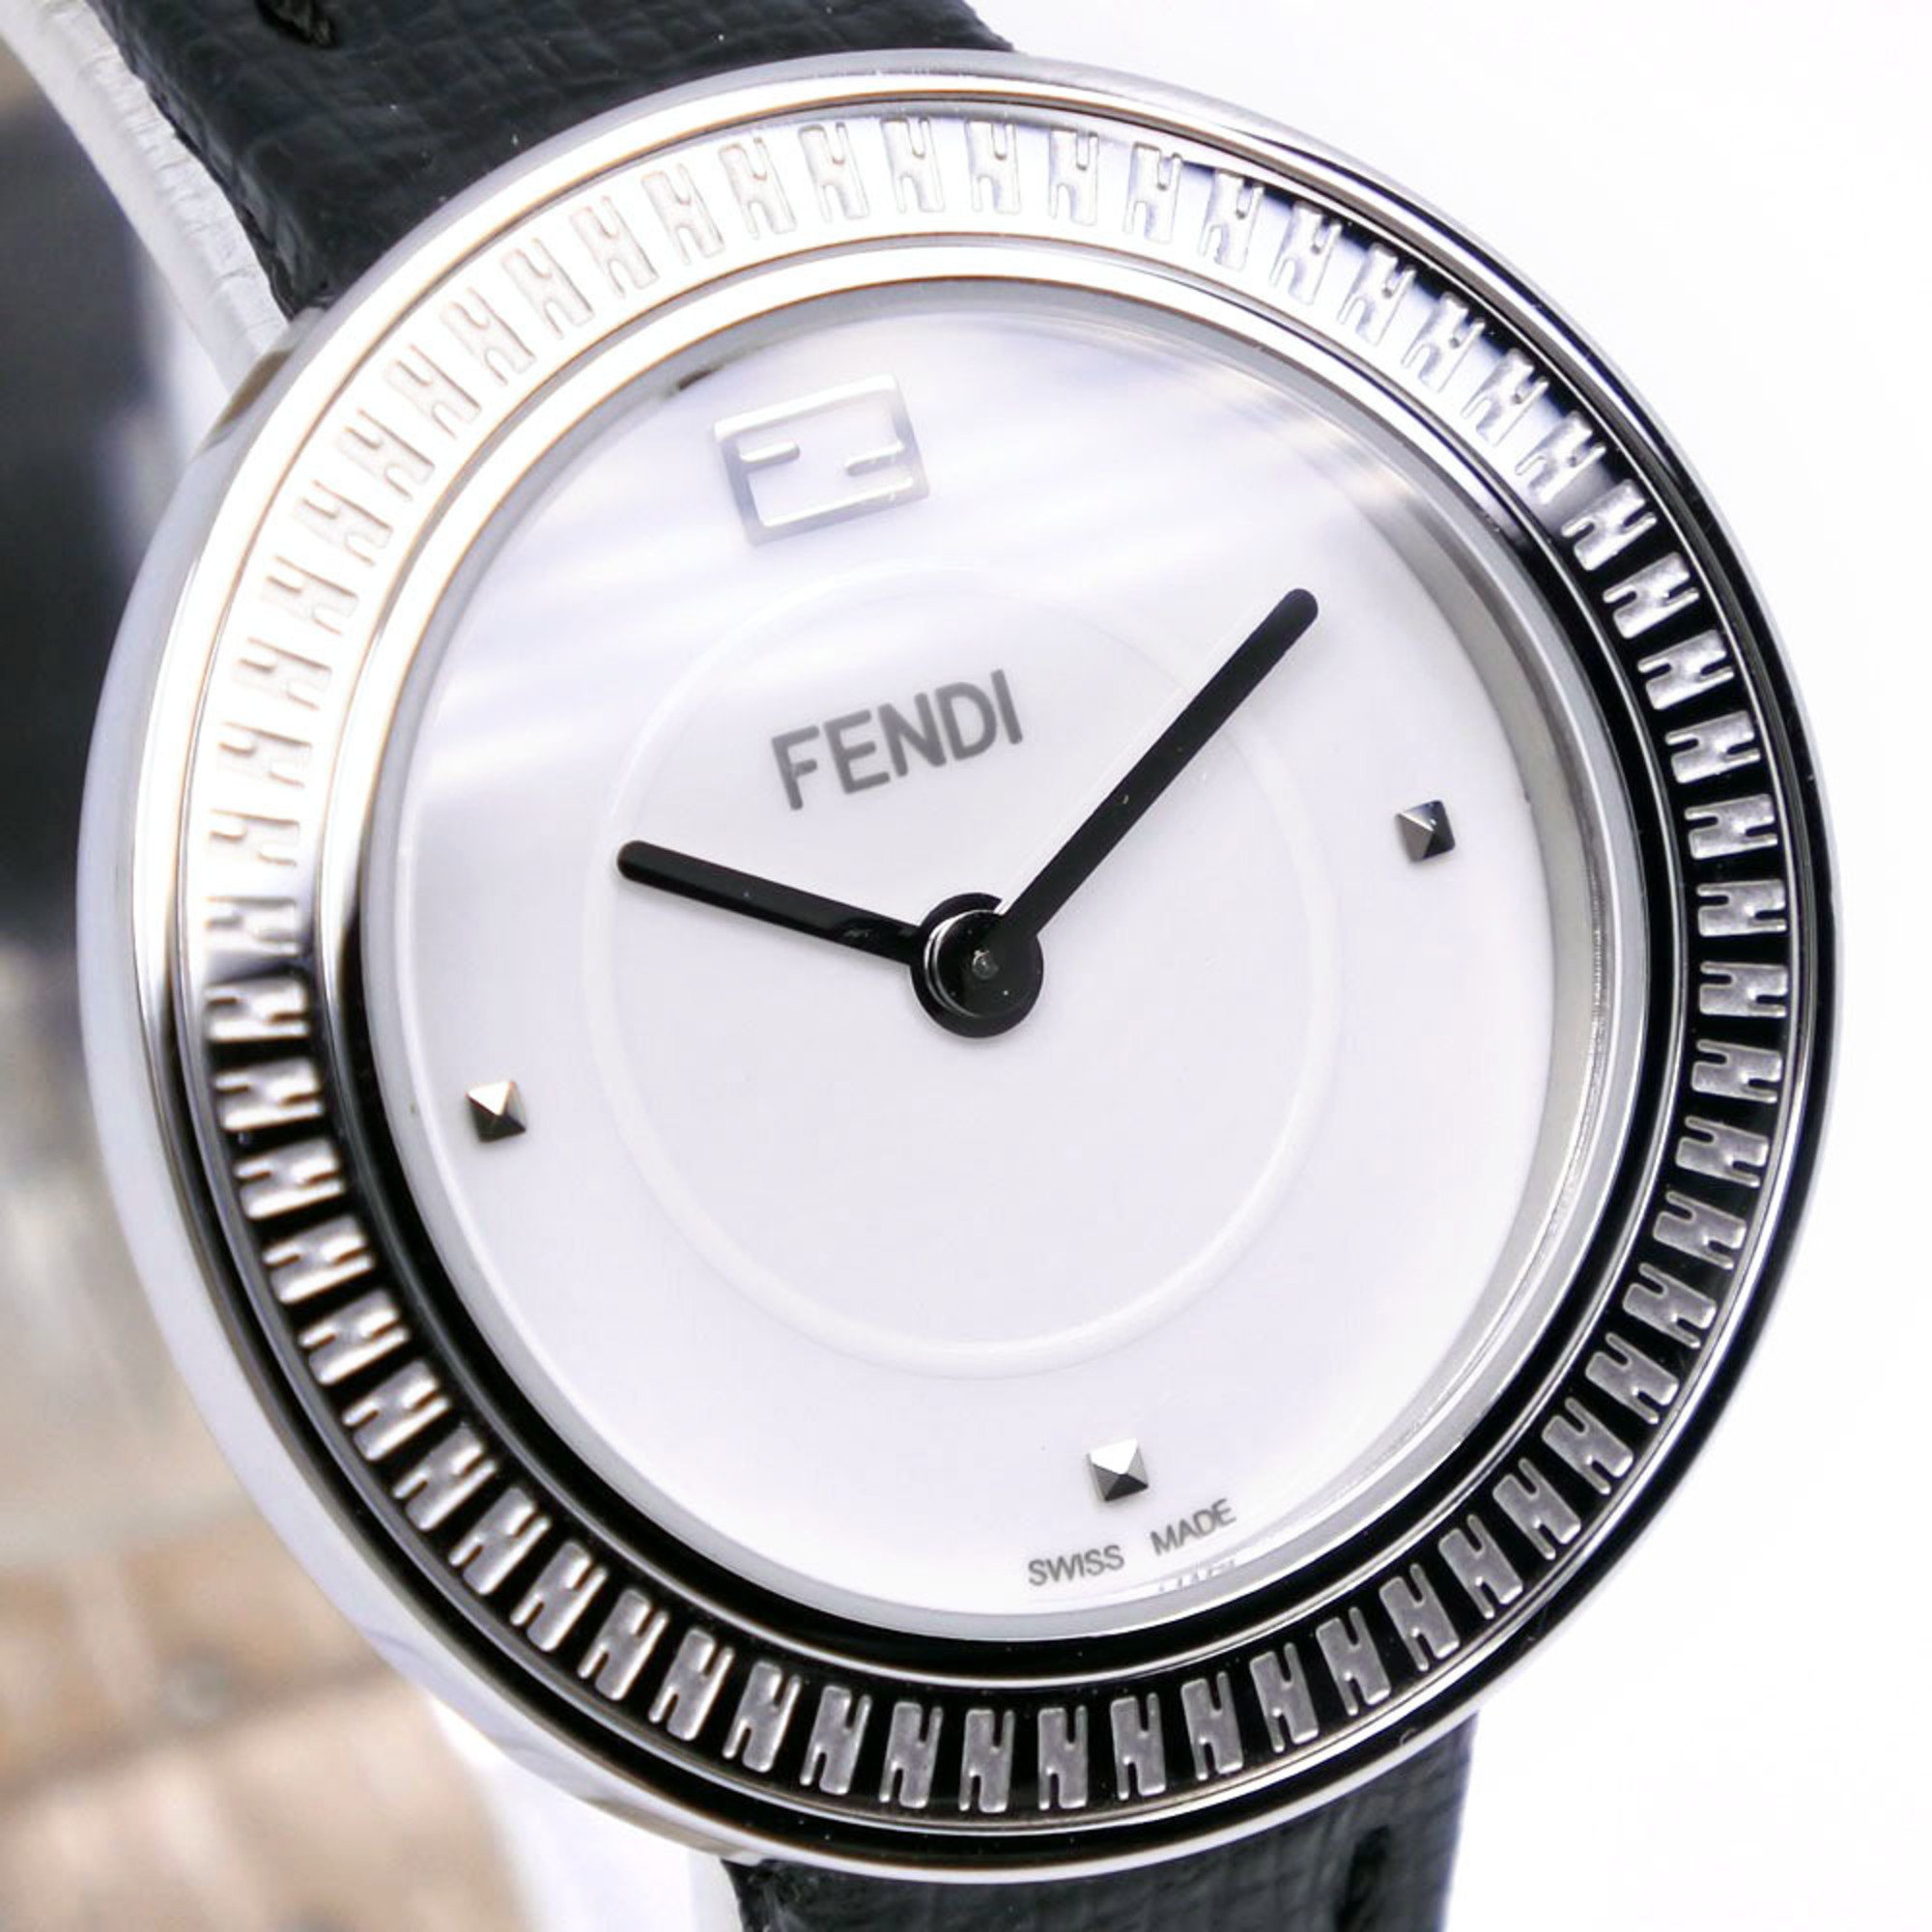 Fendi My Way Watch 35000S Stainless Steel x Leather Black Quartz Analog Display Ladies White Dial